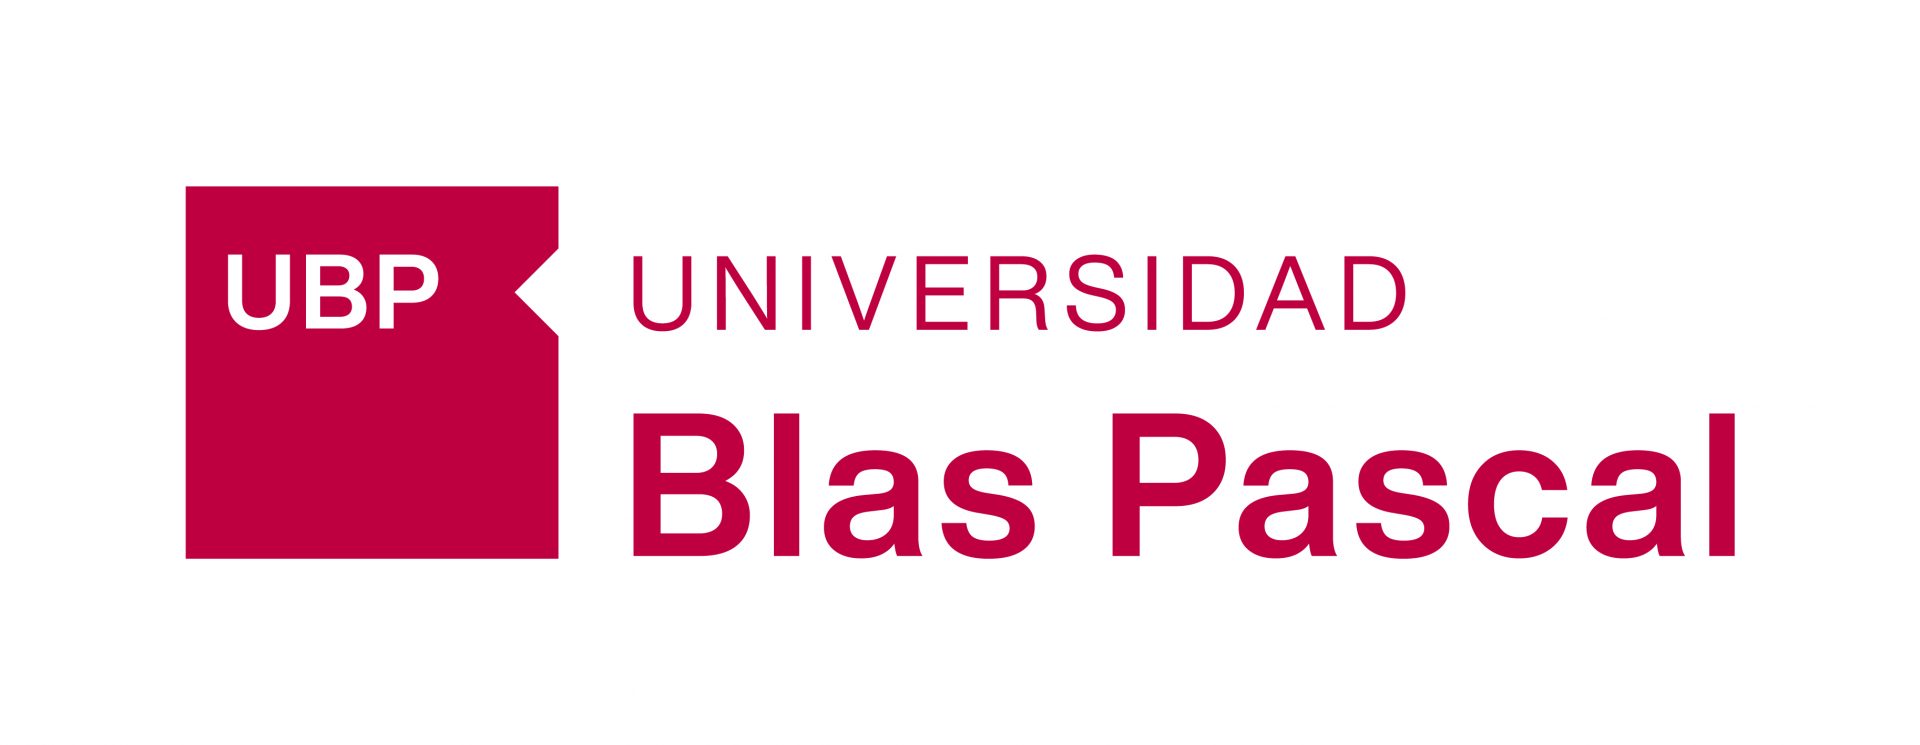 Logo_UBP - Universidad Blas Pascal